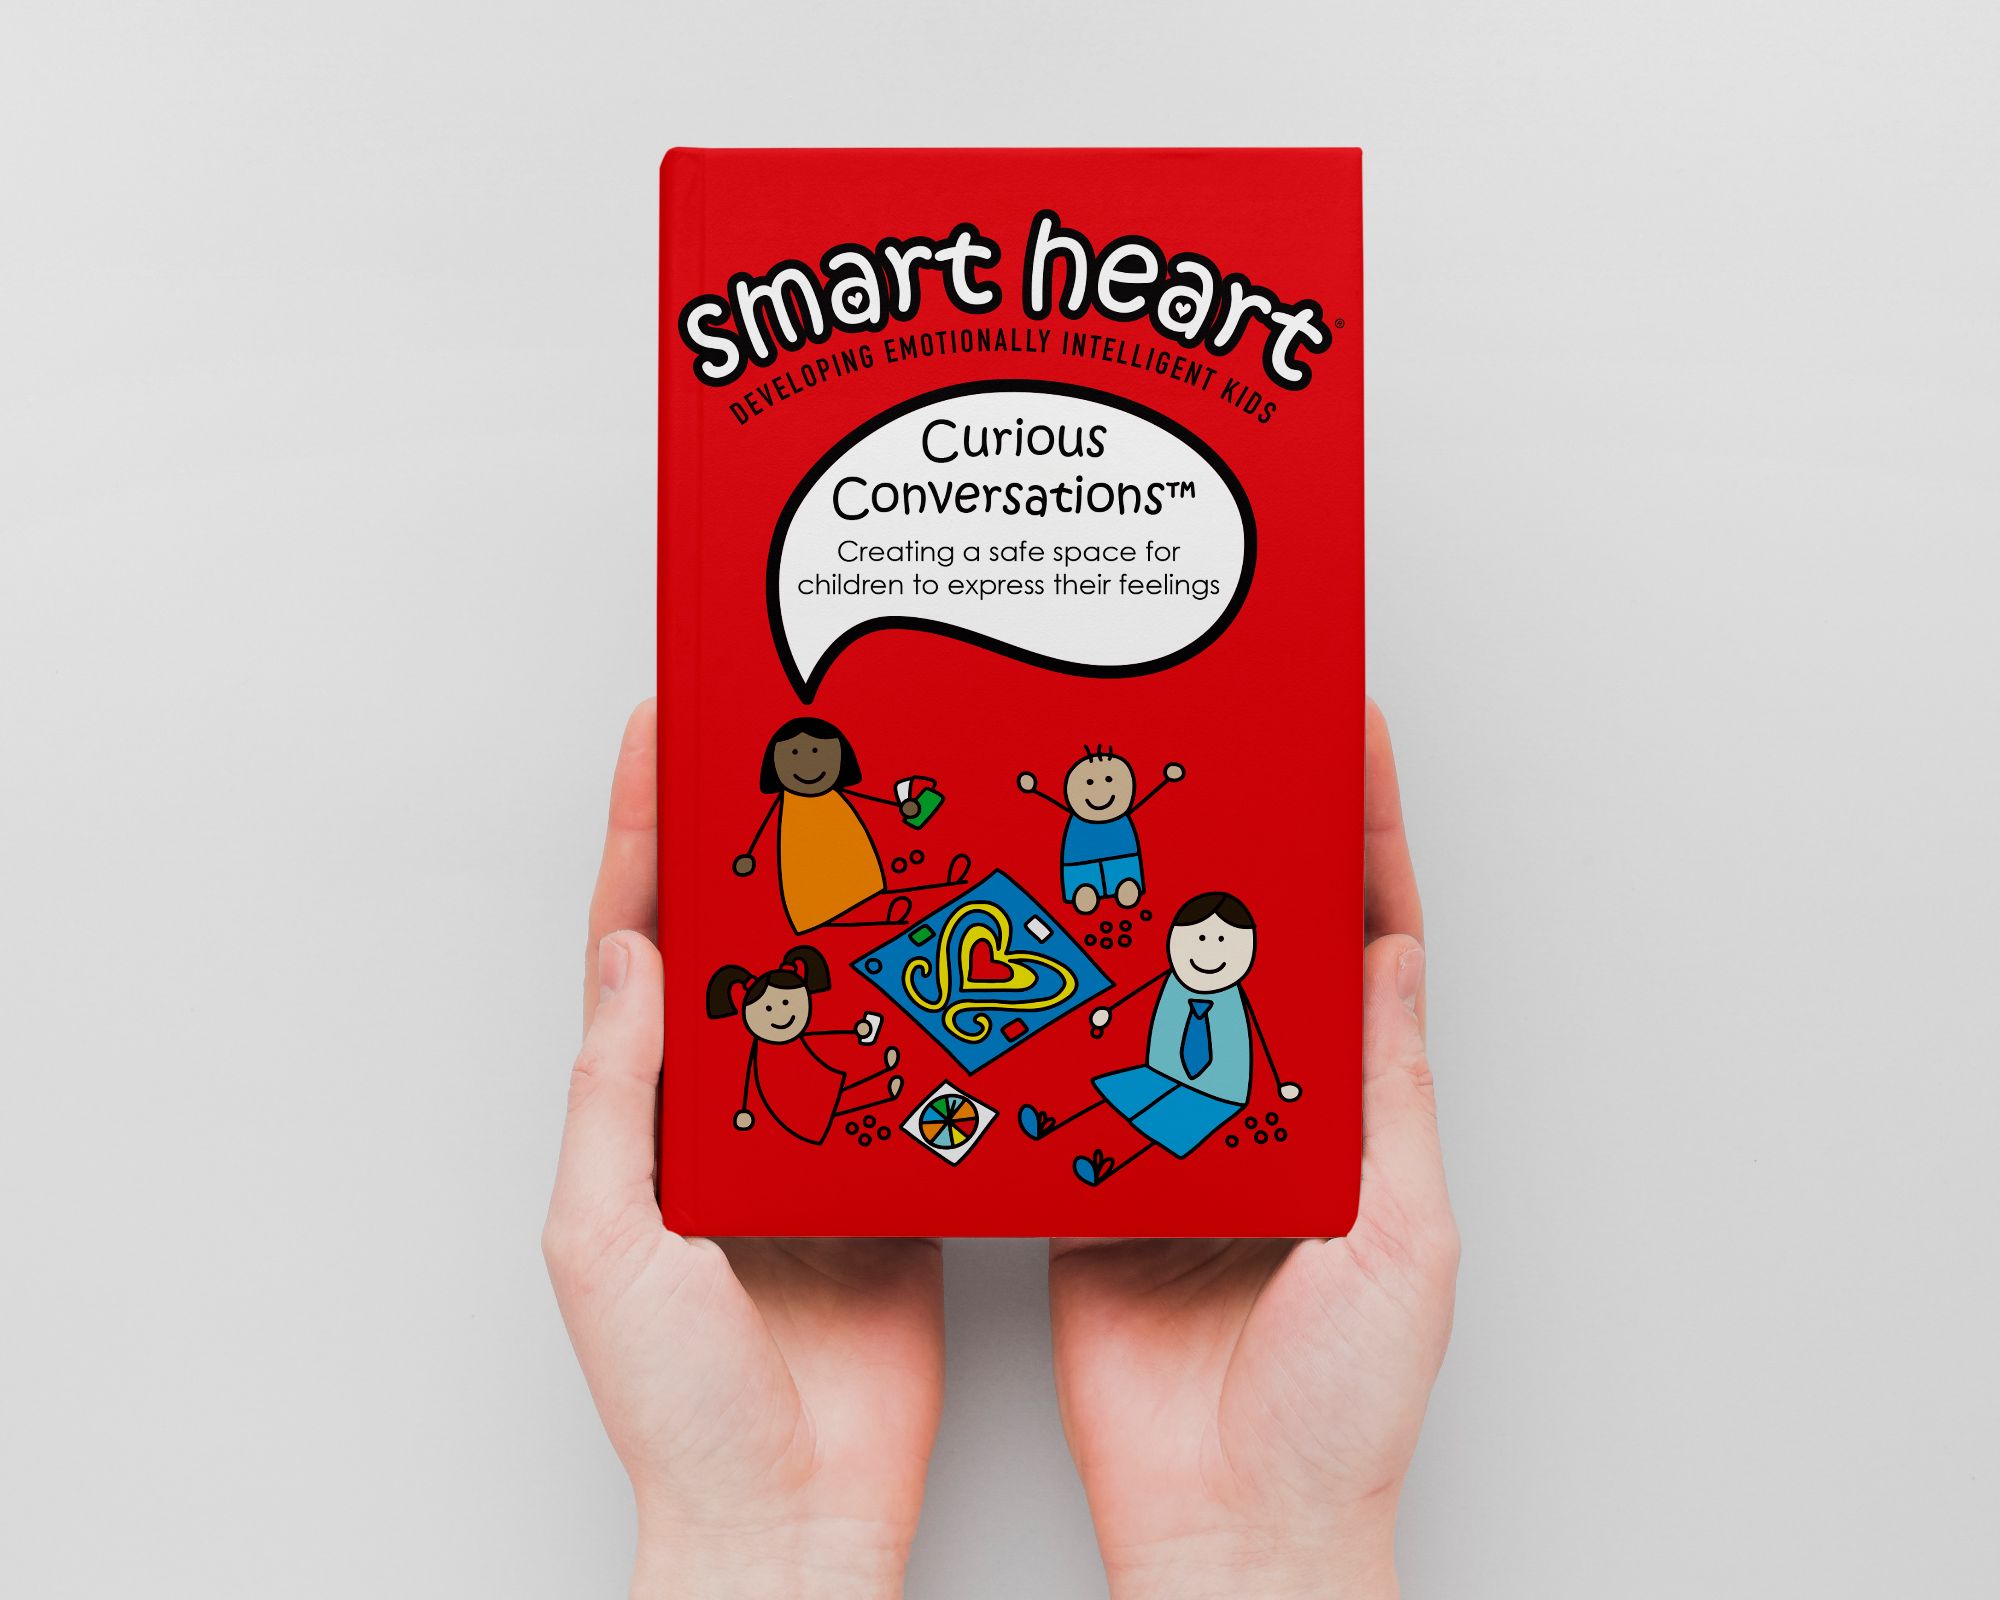 Curious_Conversations book in hands3.jpg